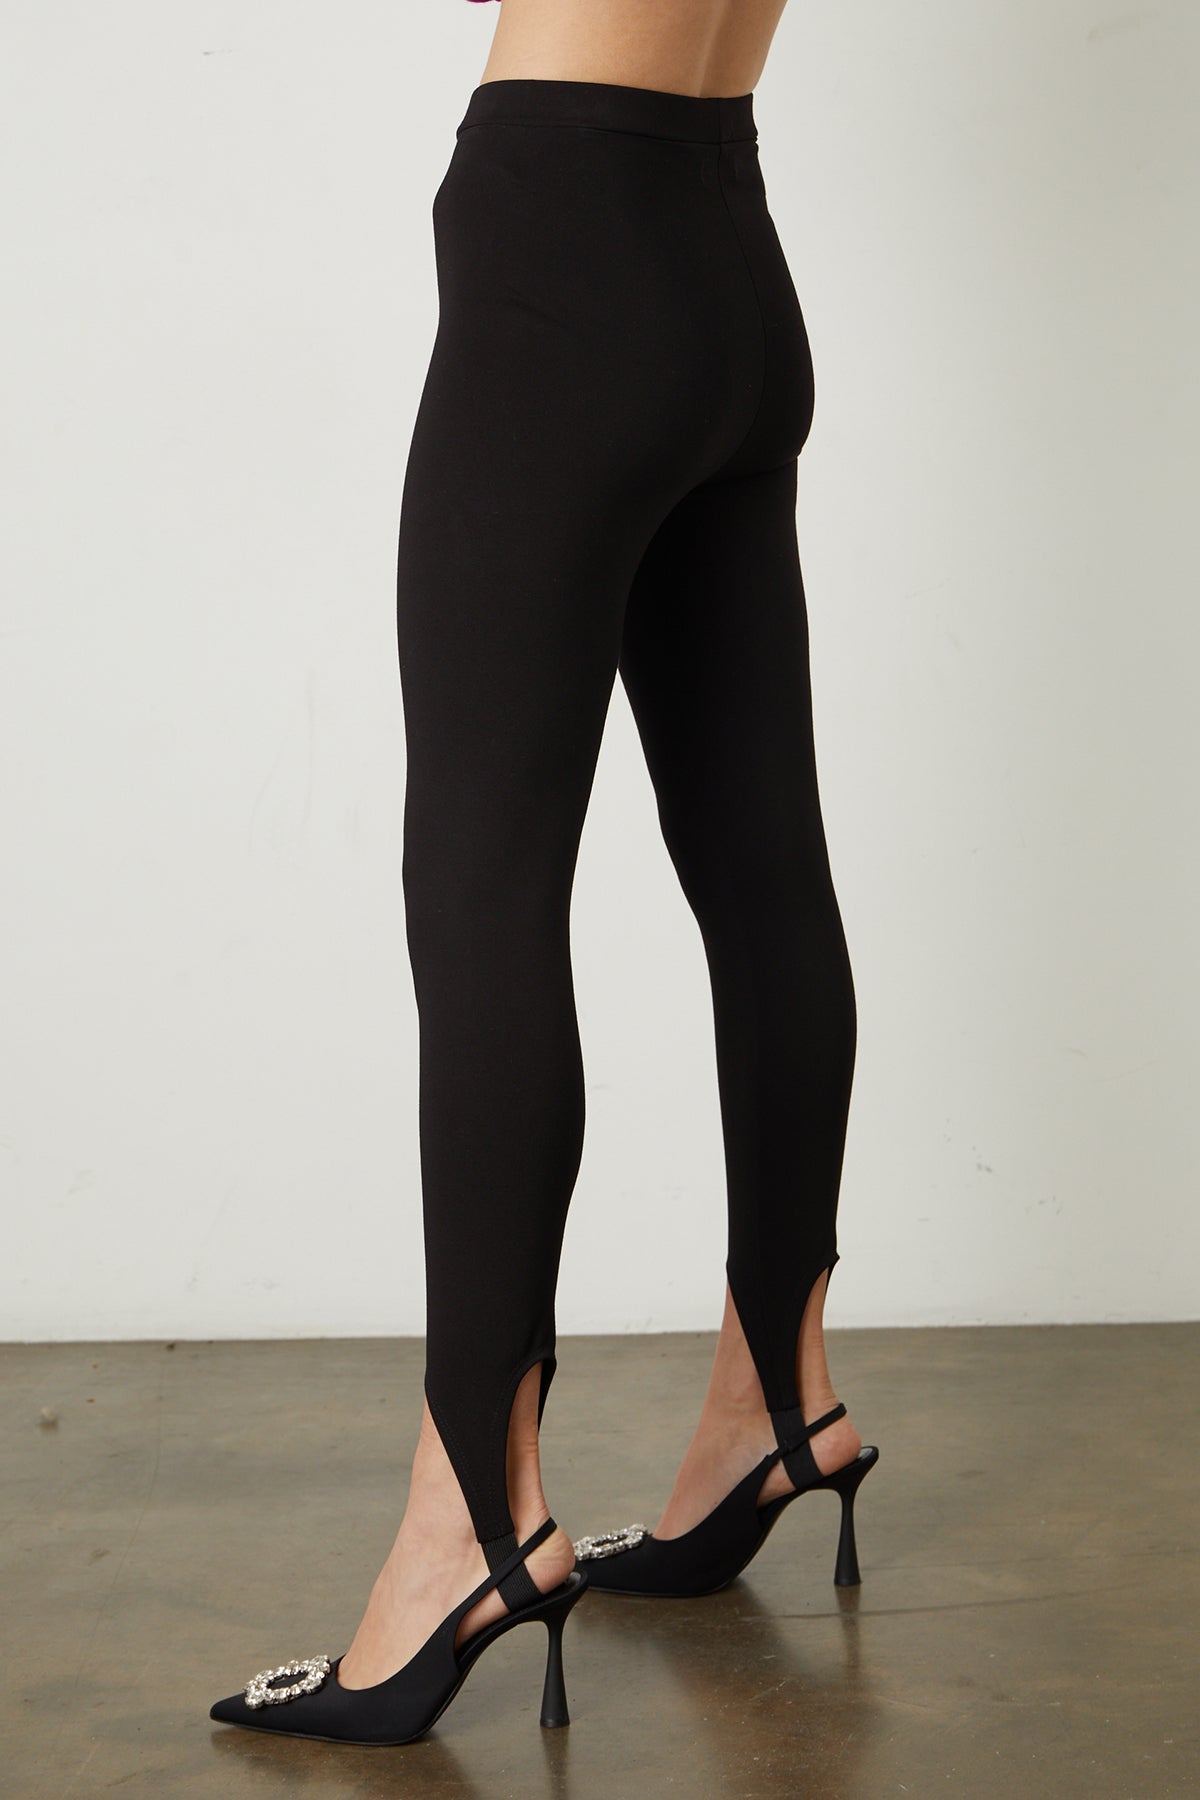 Vixen Ponti Stirrup Legging in black with black heels side-25548600443073